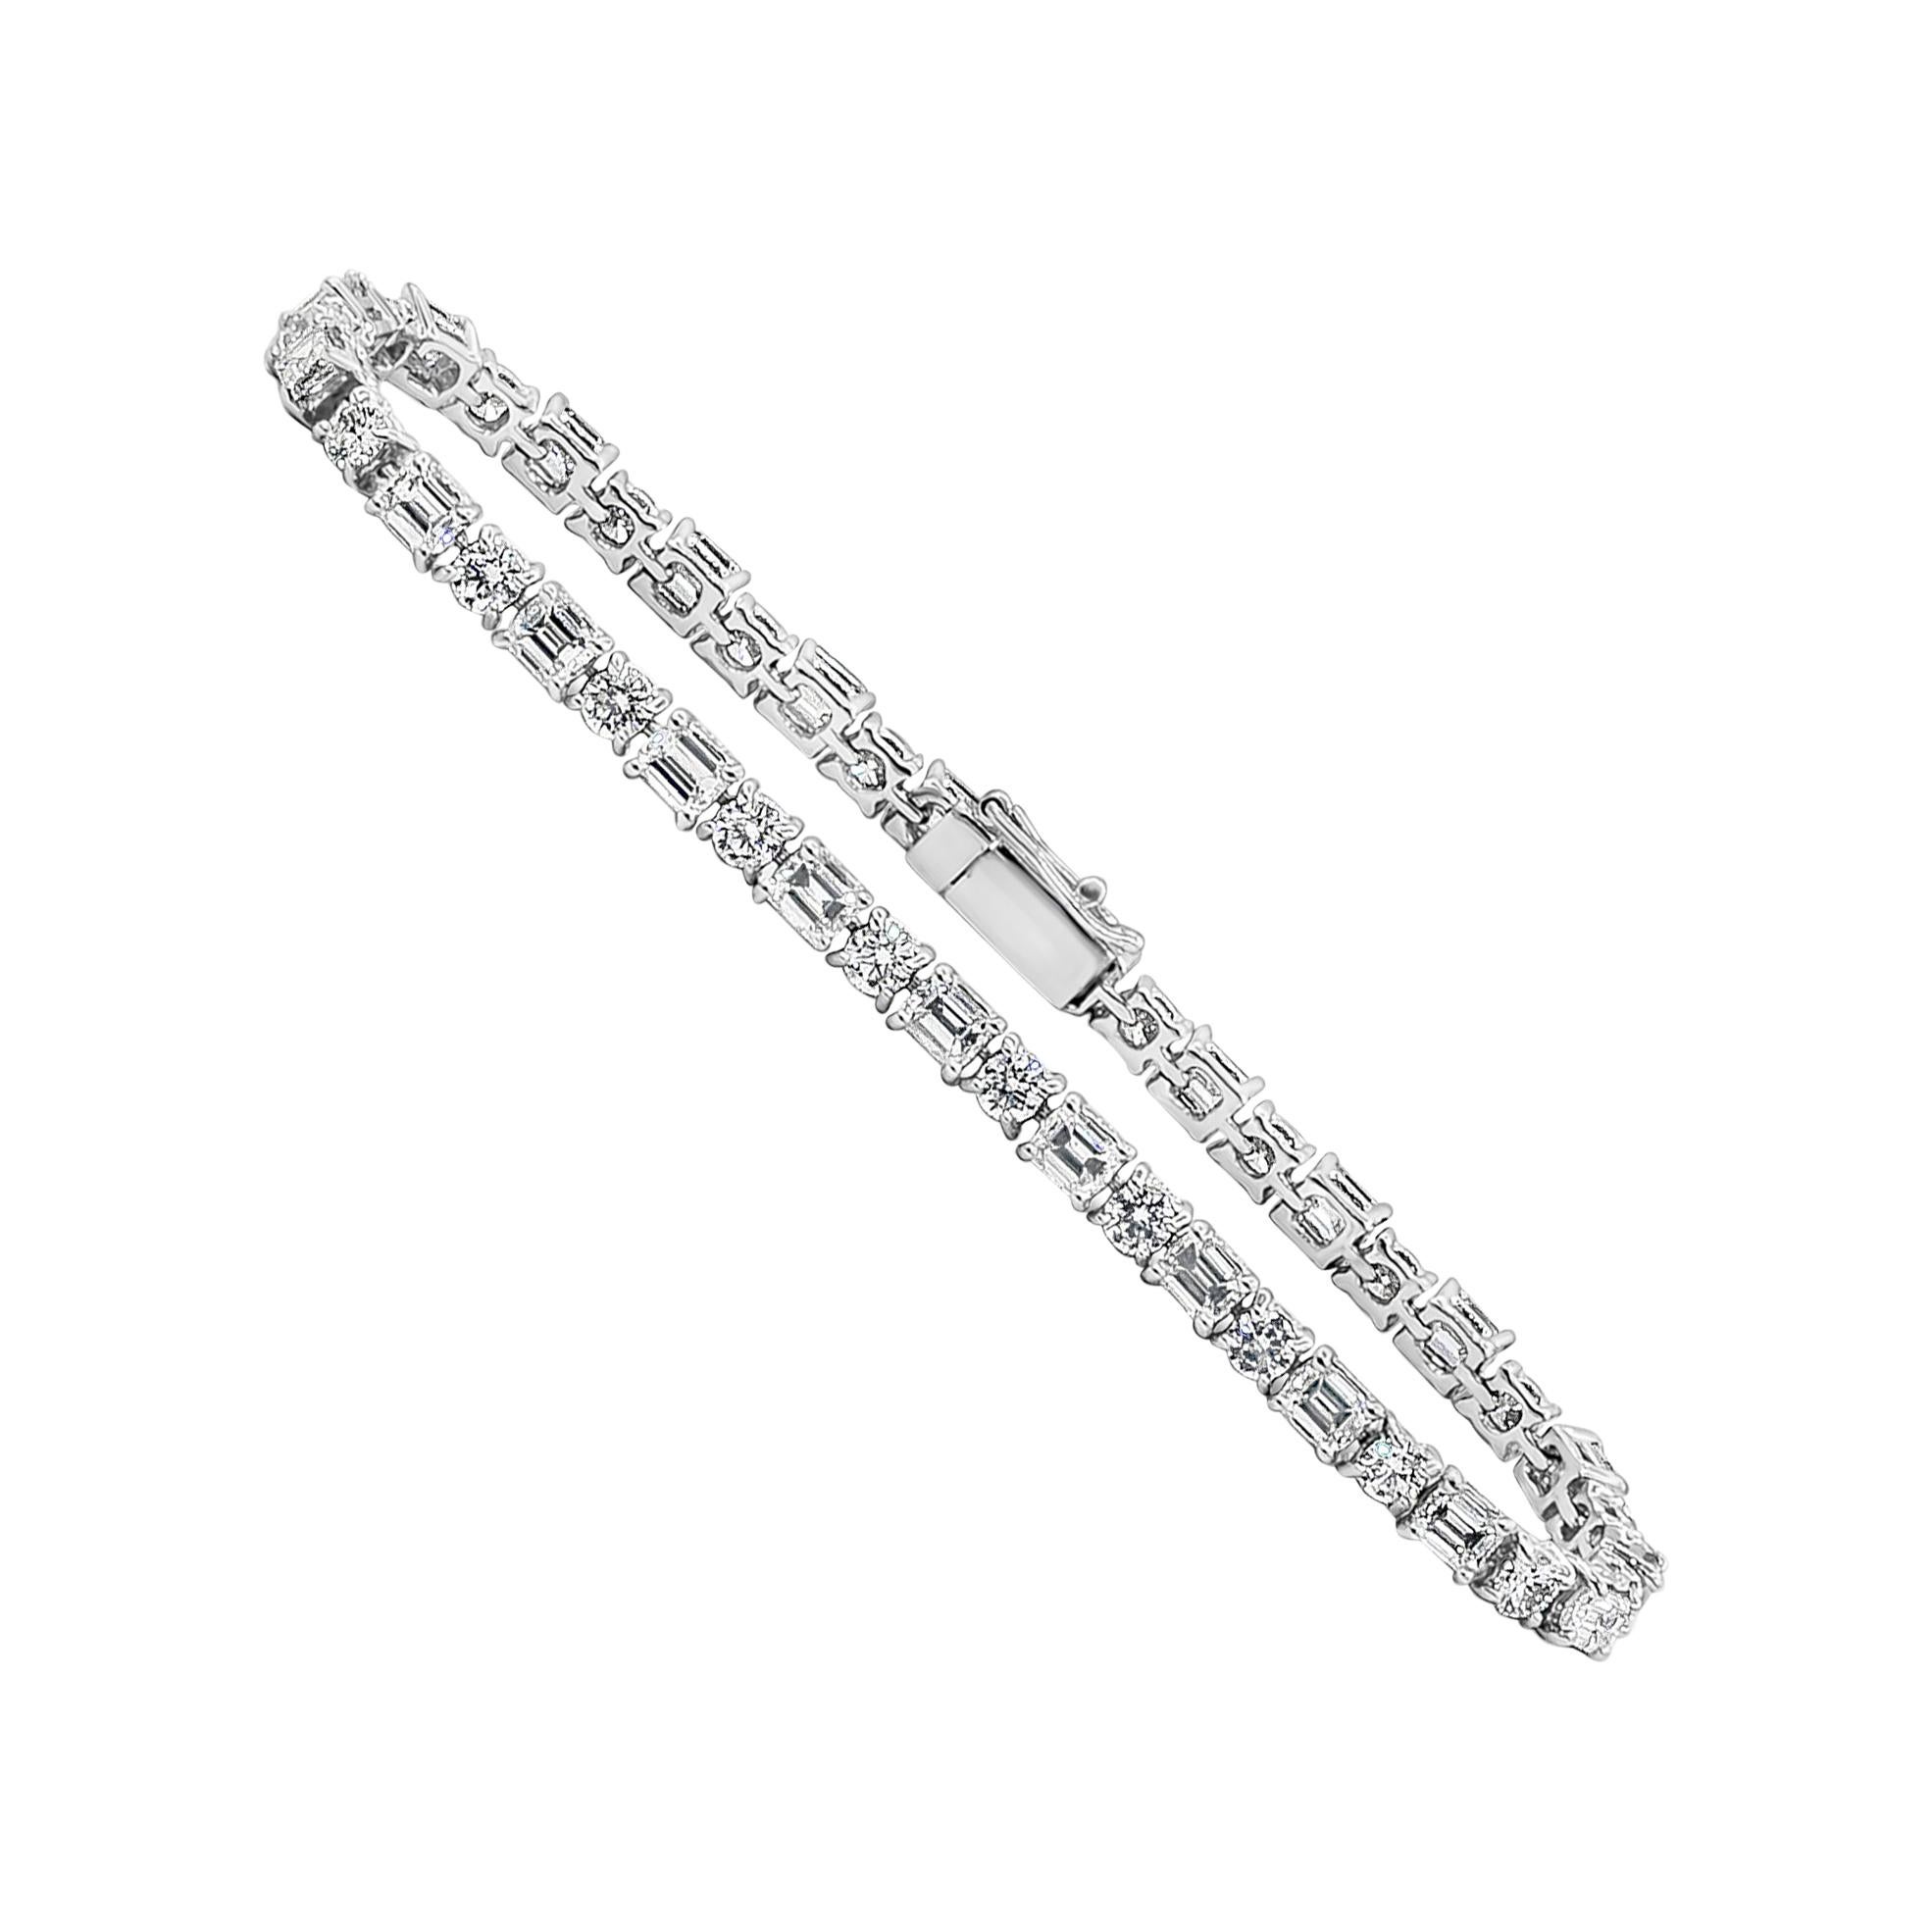 Roman Malakov 6.60 Carats Total Mixed Cut Alternating Diamond Tennis Bracelet For Sale